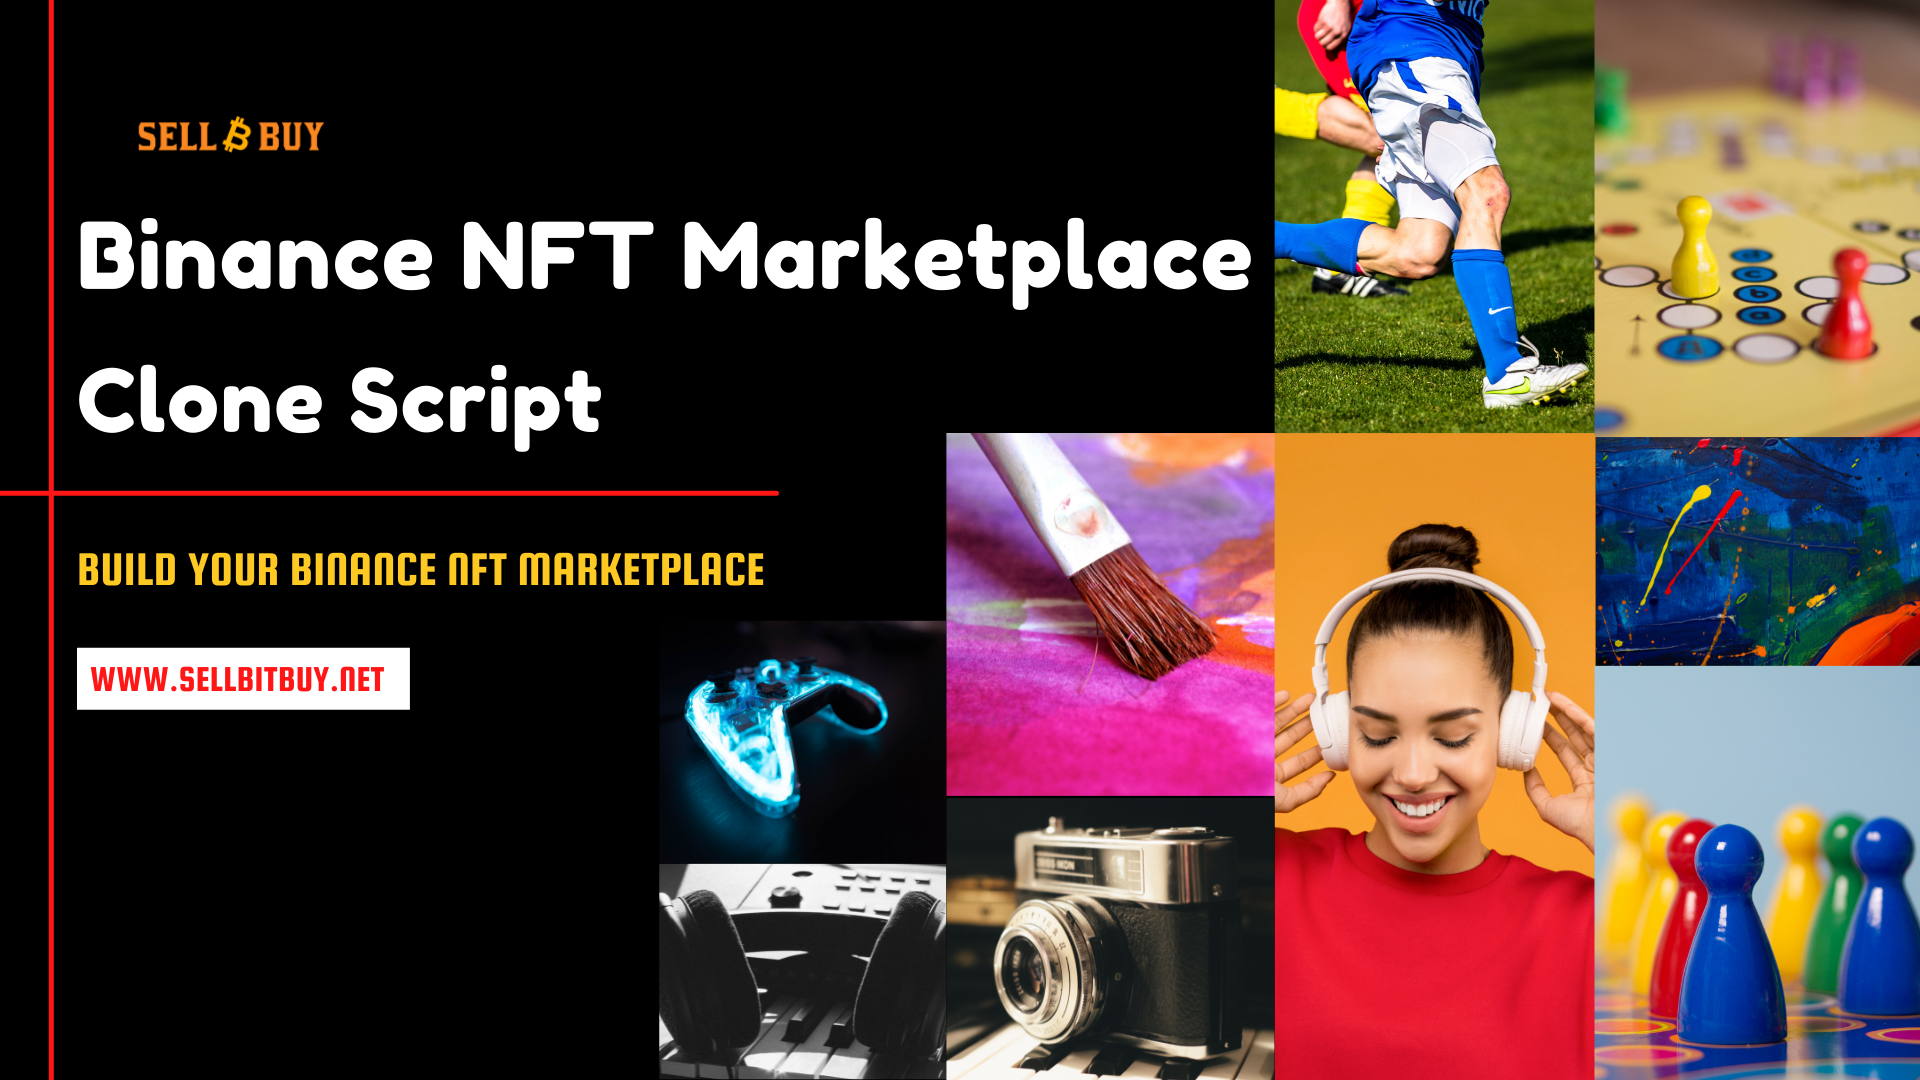 Binance NFT Clone Script - To Launch A P2P NFT Marketplace Like Binance NFT